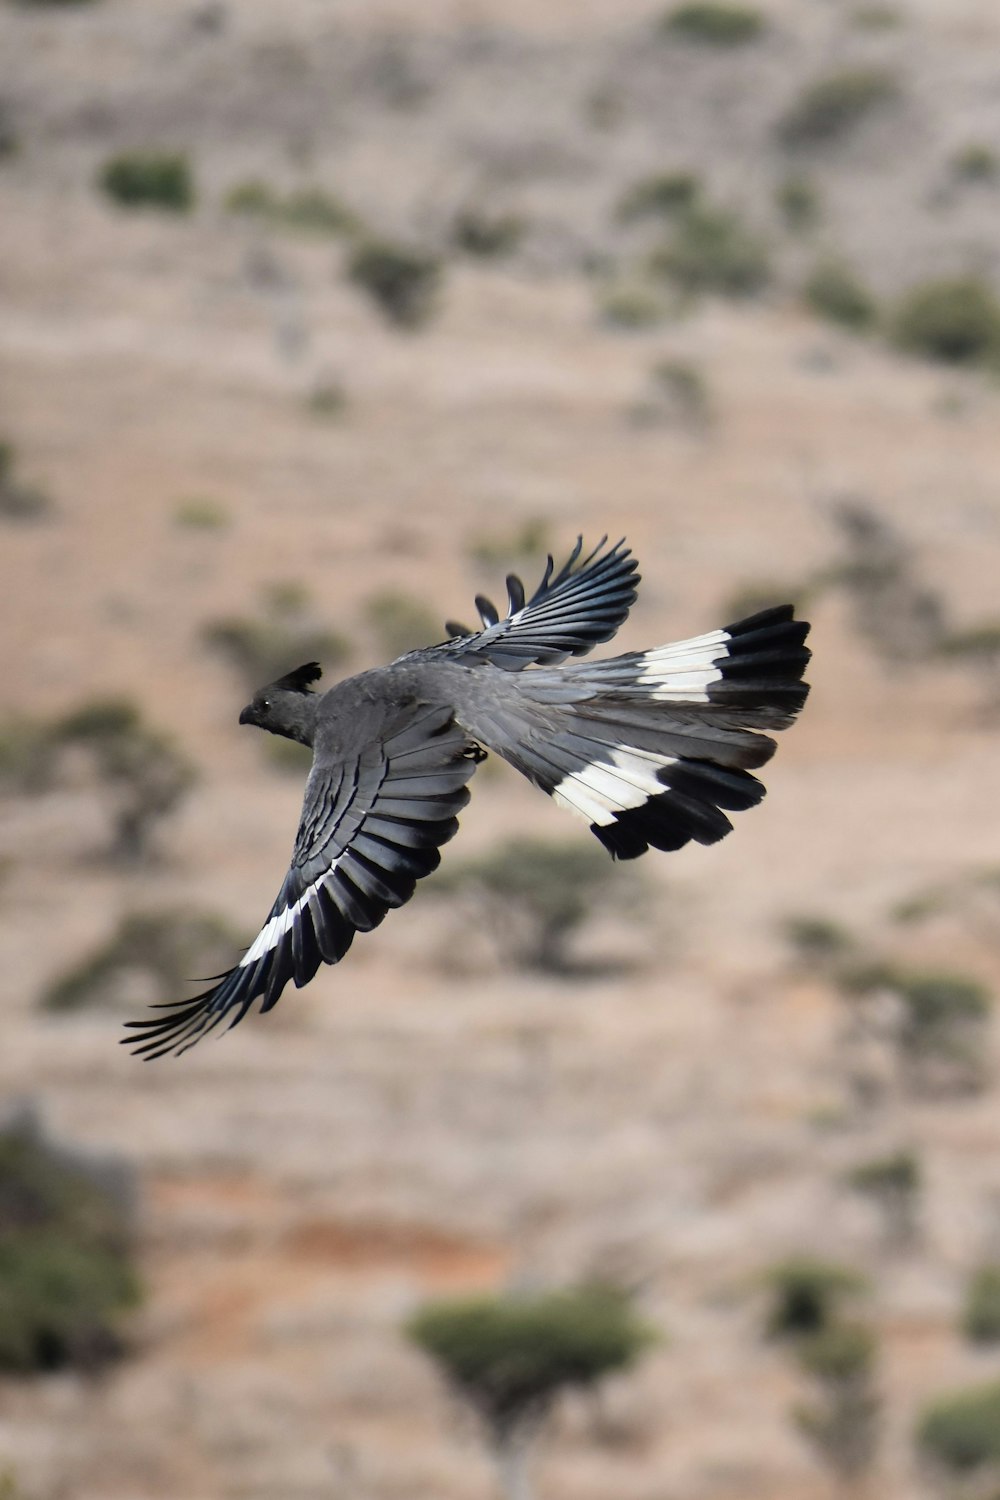 black and white bird flying during daytime